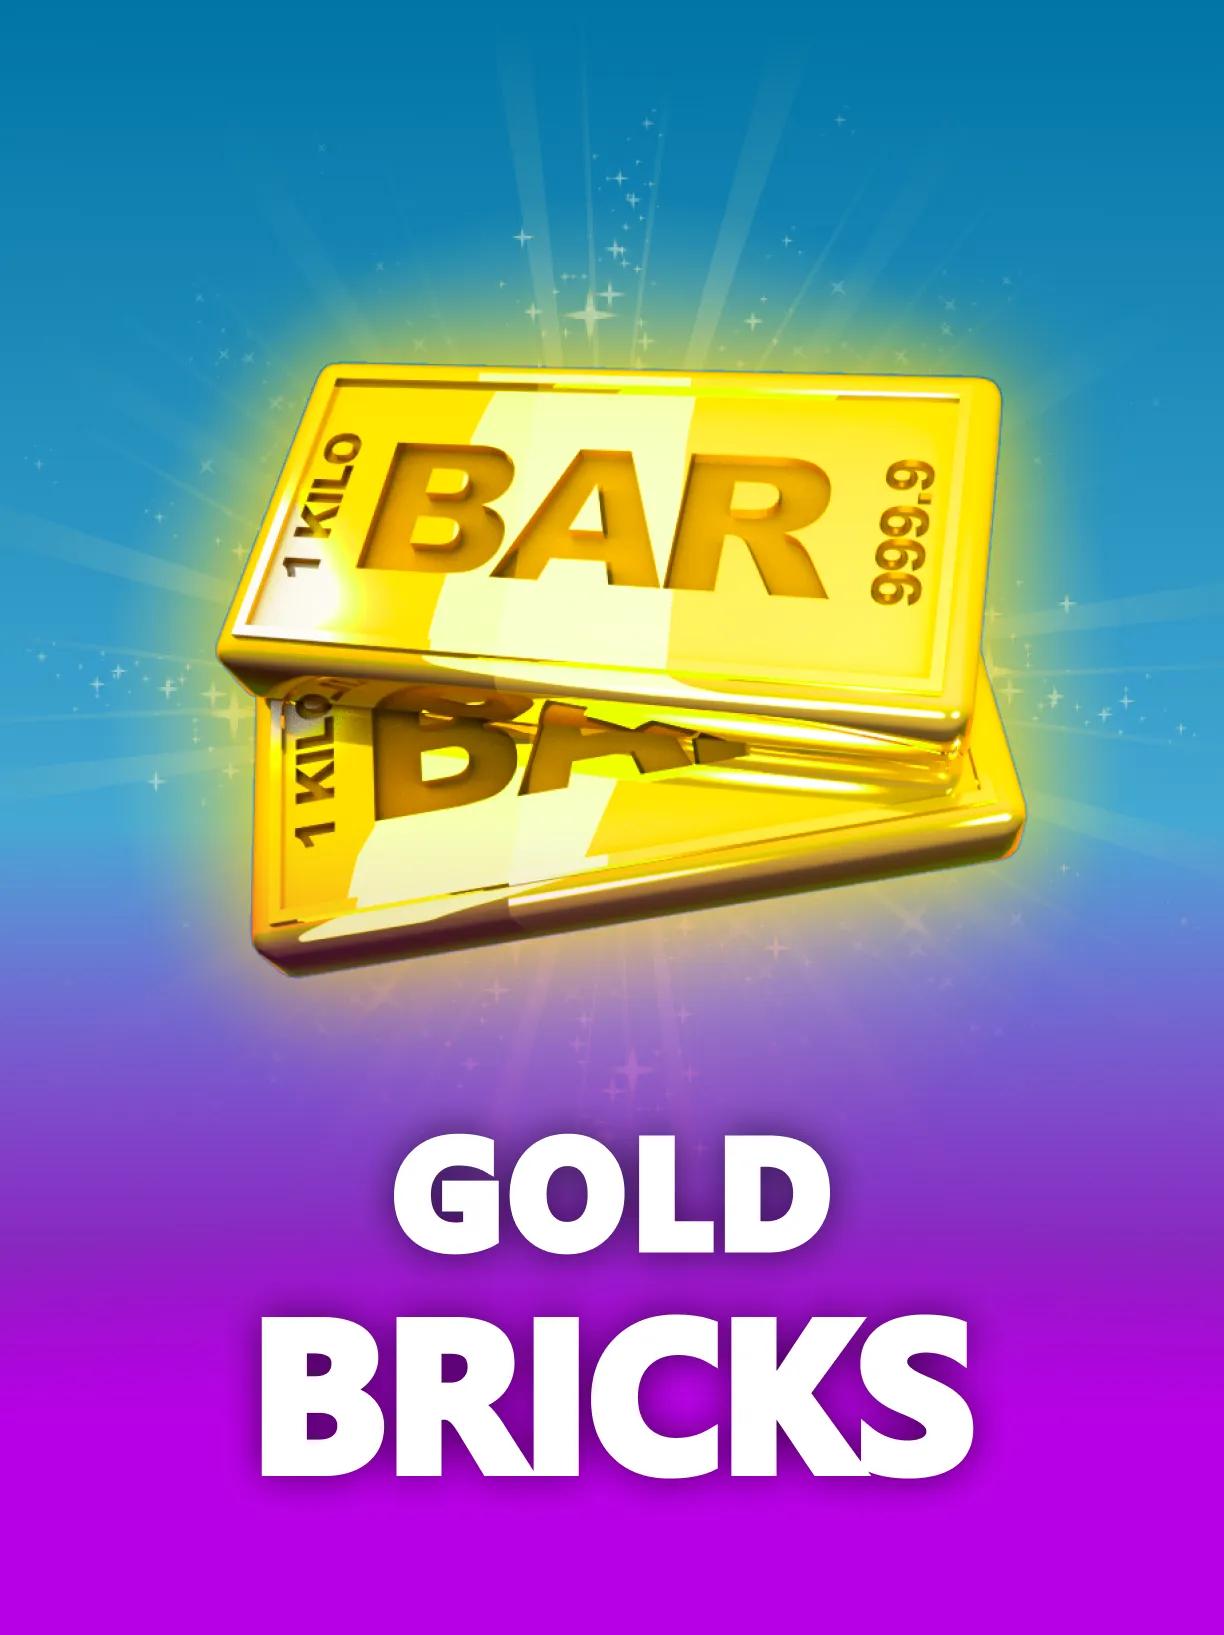 Gold Bricks